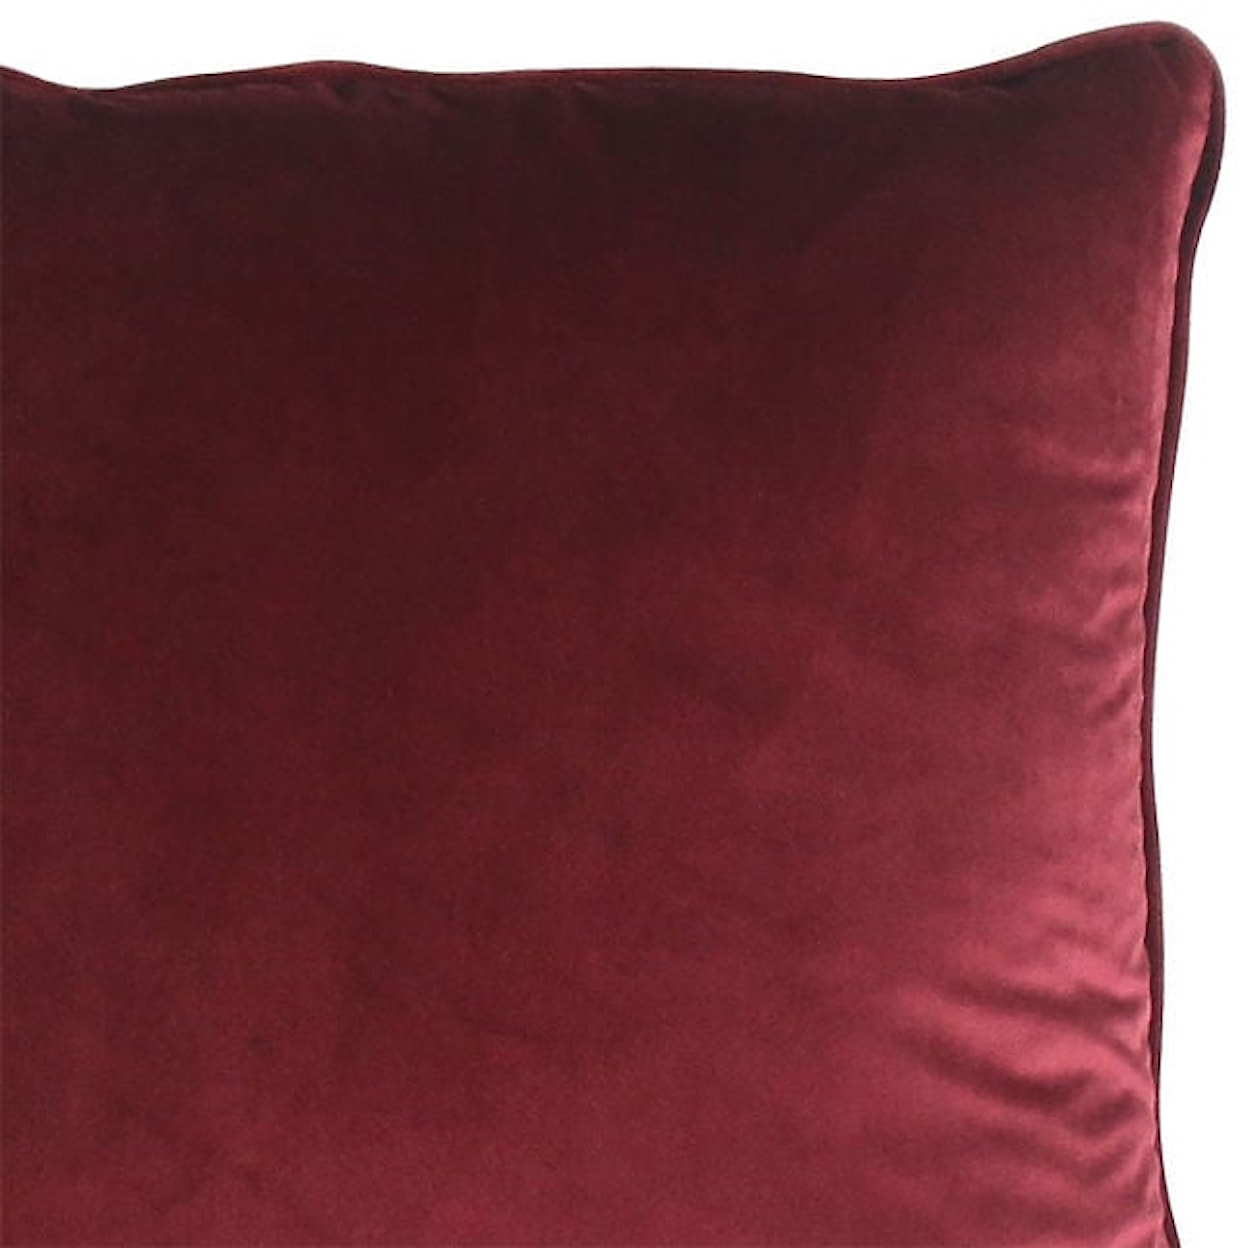 Dovetail Furniture Dovetail Accessories Iris Pillow Burgundy